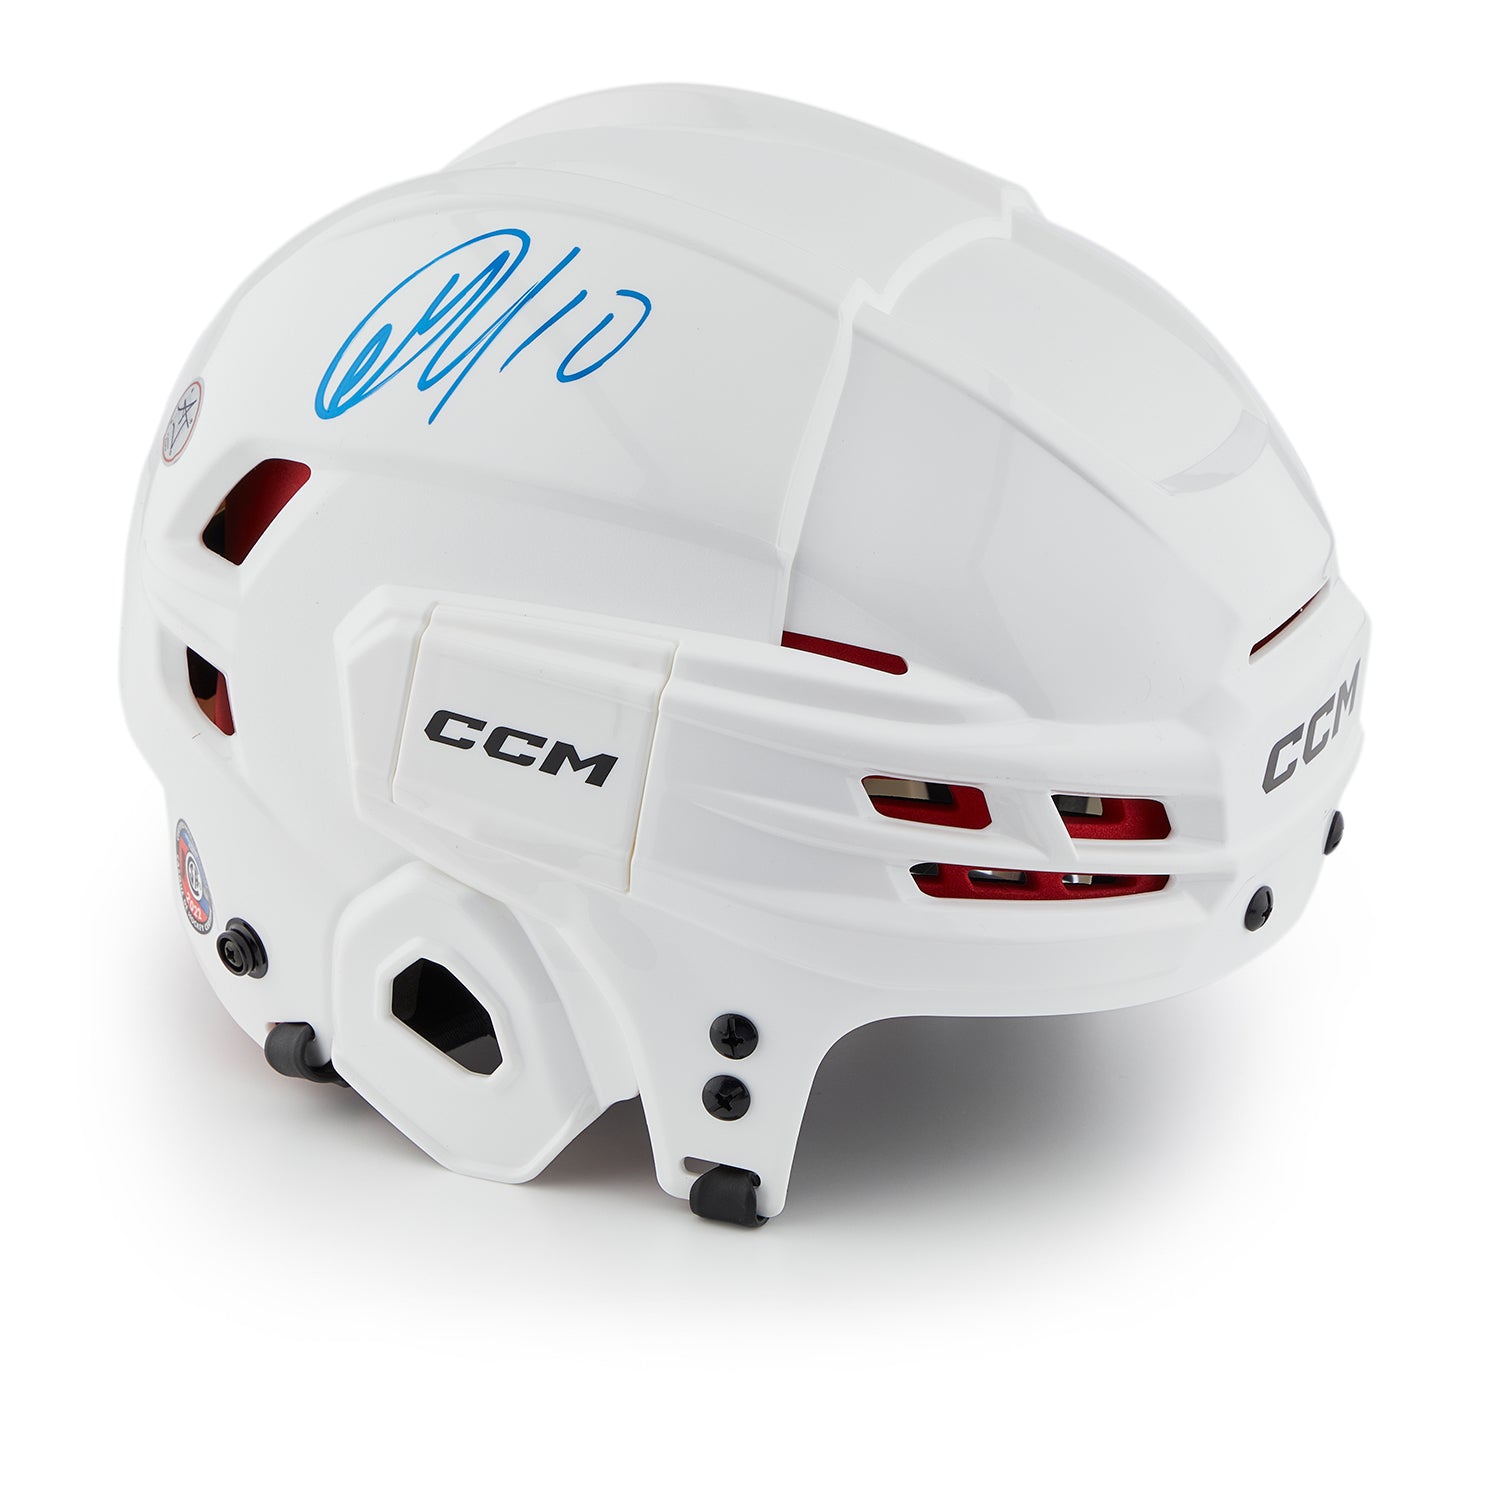 Artemi Panarin Autographed White CCM Tacks Hockey Helmet